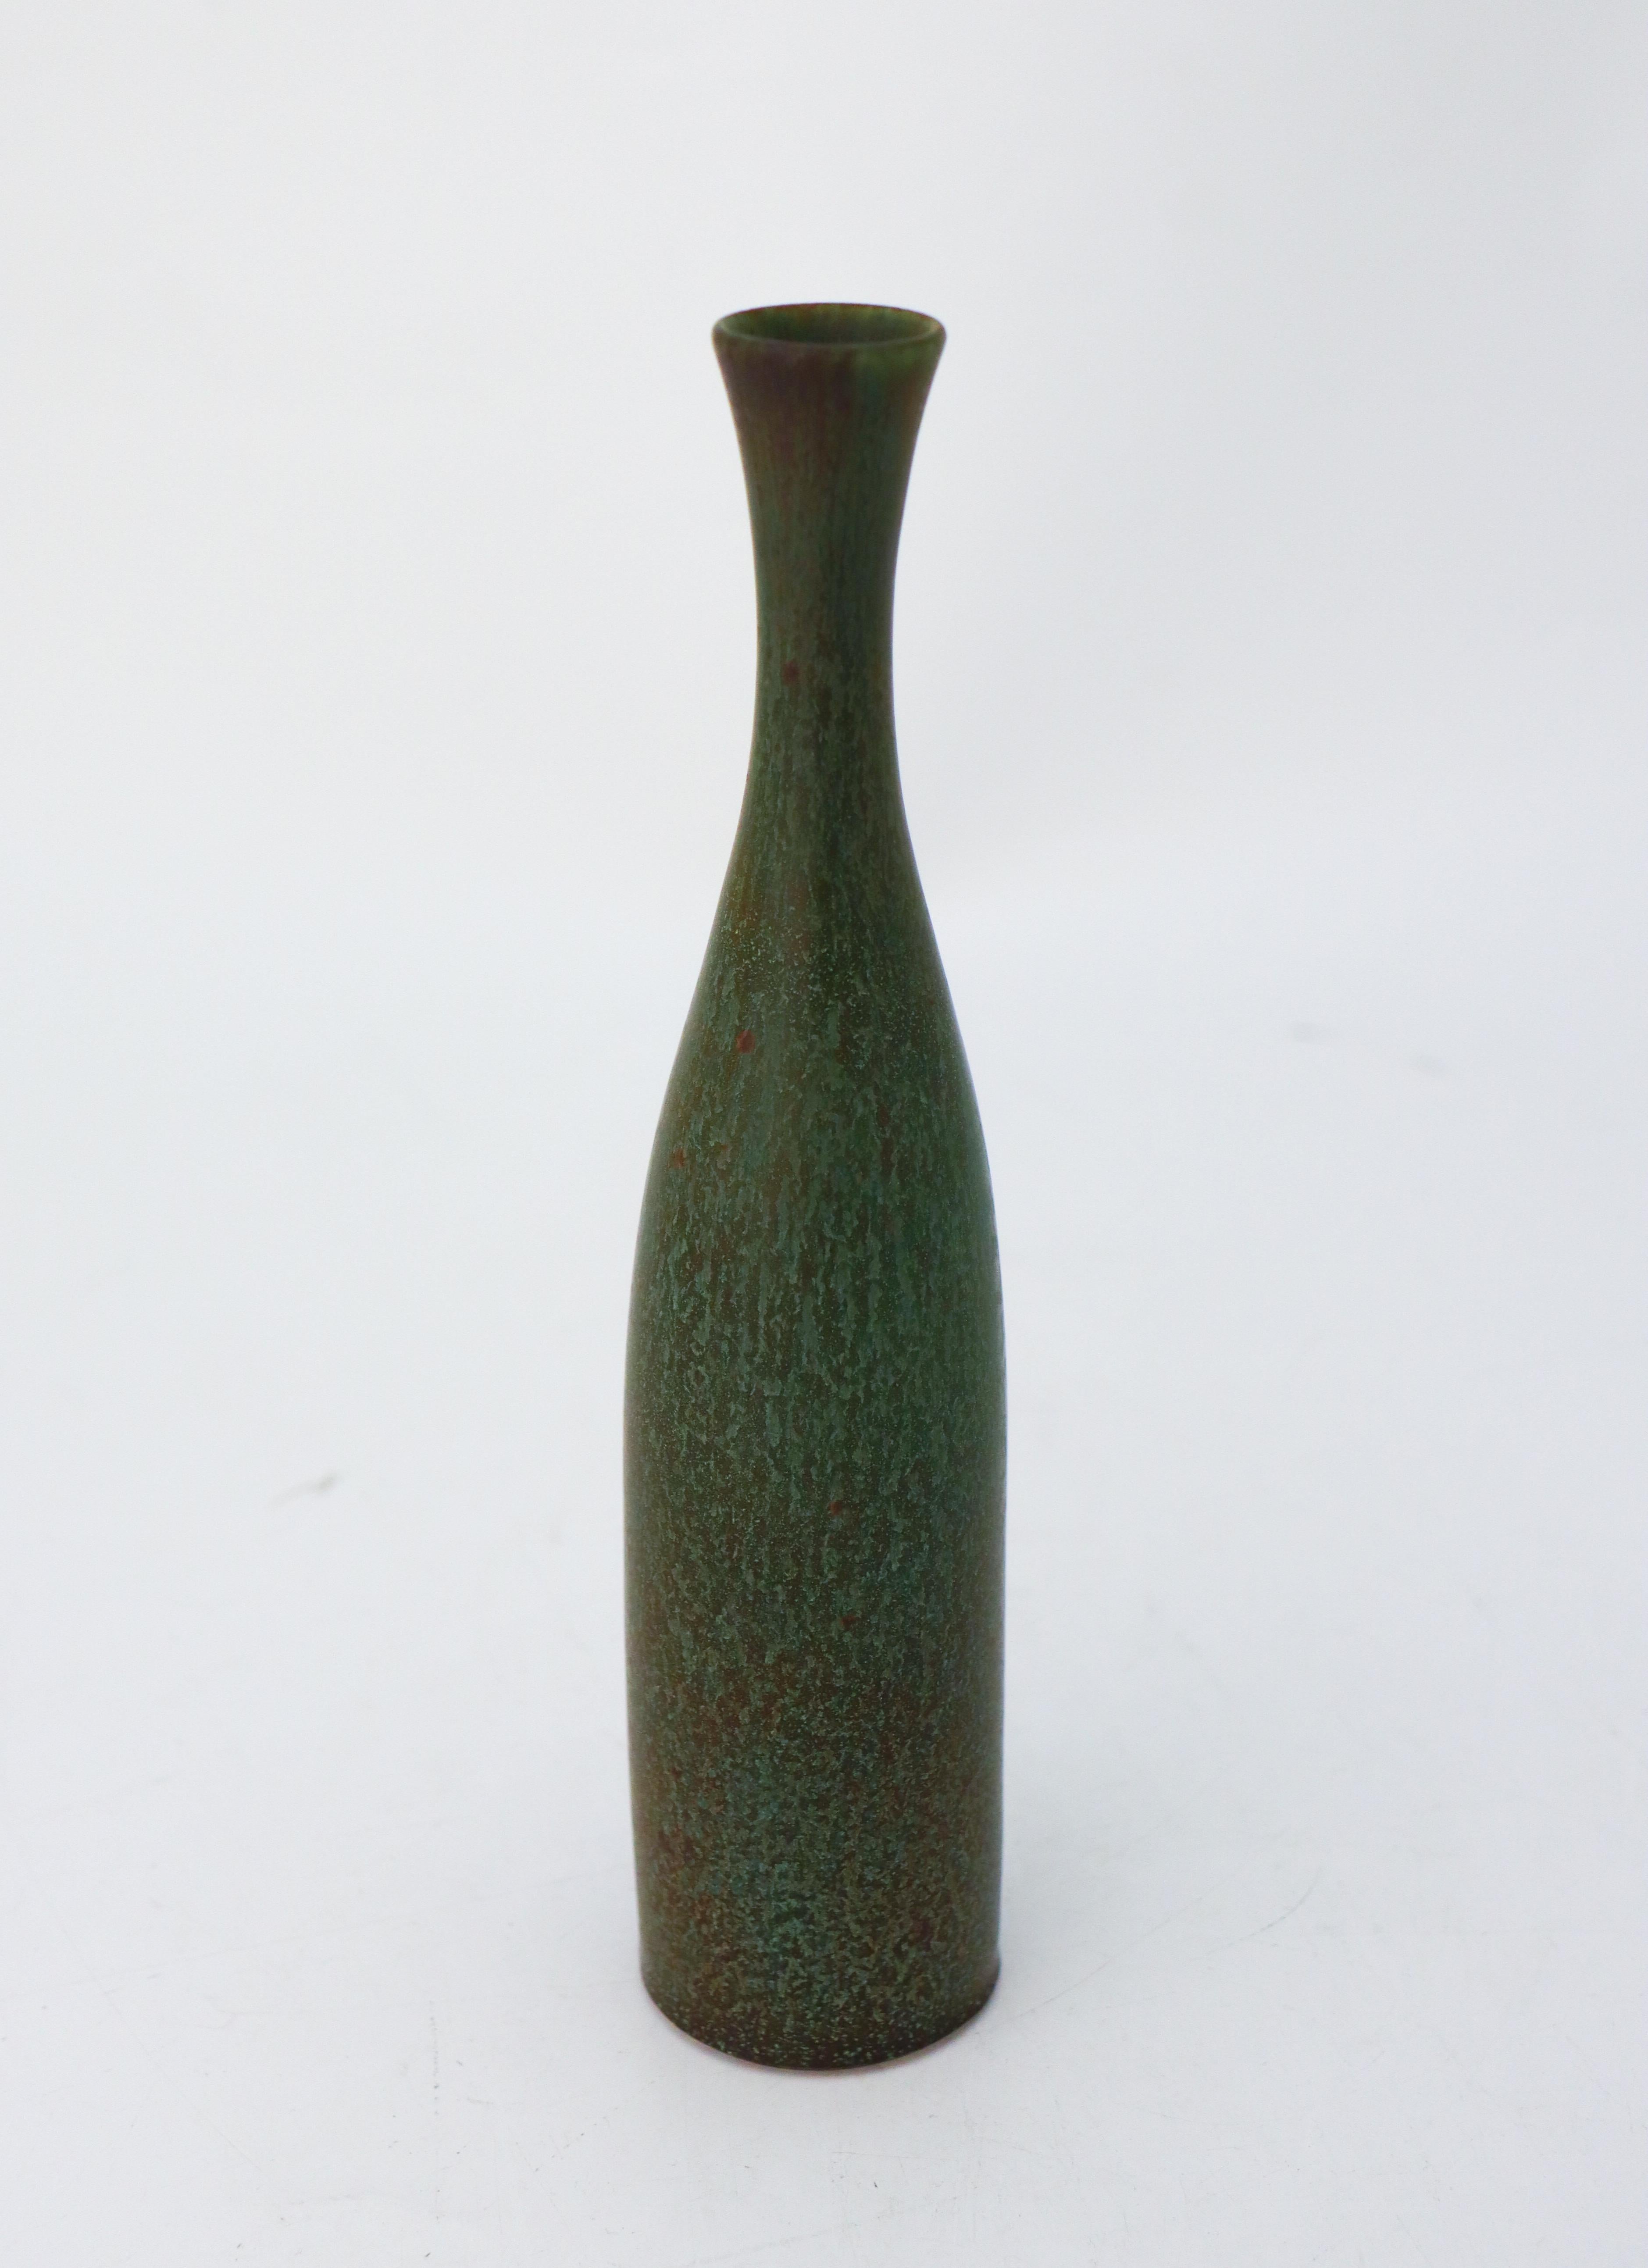 A deep green vase designed by Carl-Harry Stålhane at Rörstrand. The vase is 22 cm (8.8